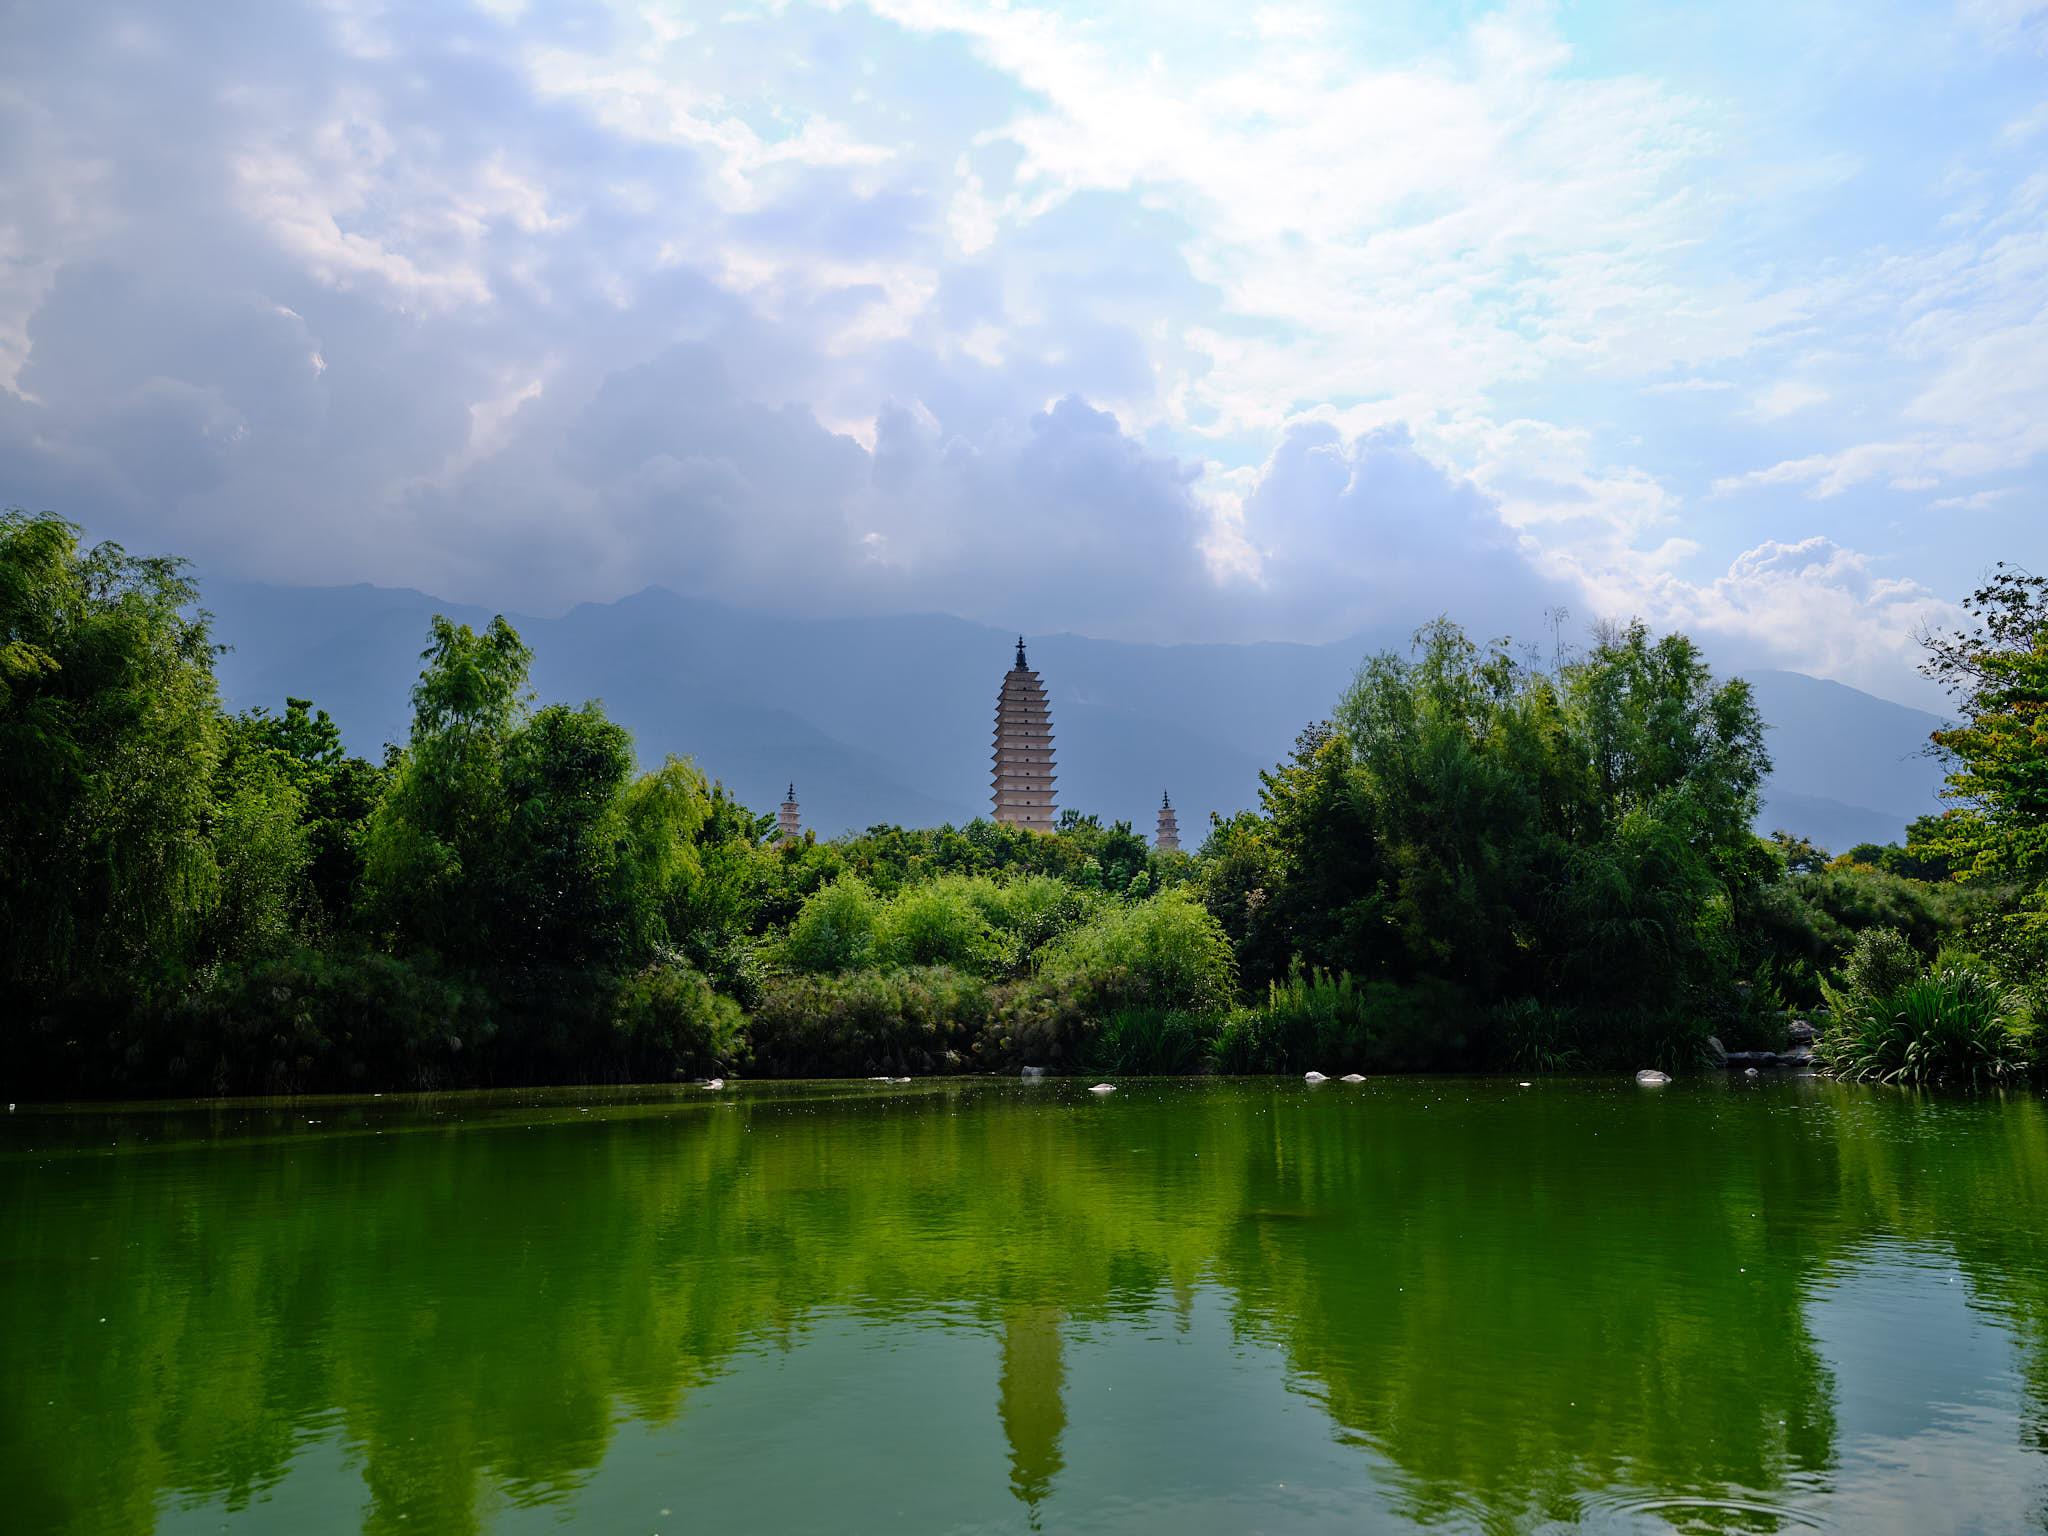 Three Pagodas reflecting in the lake